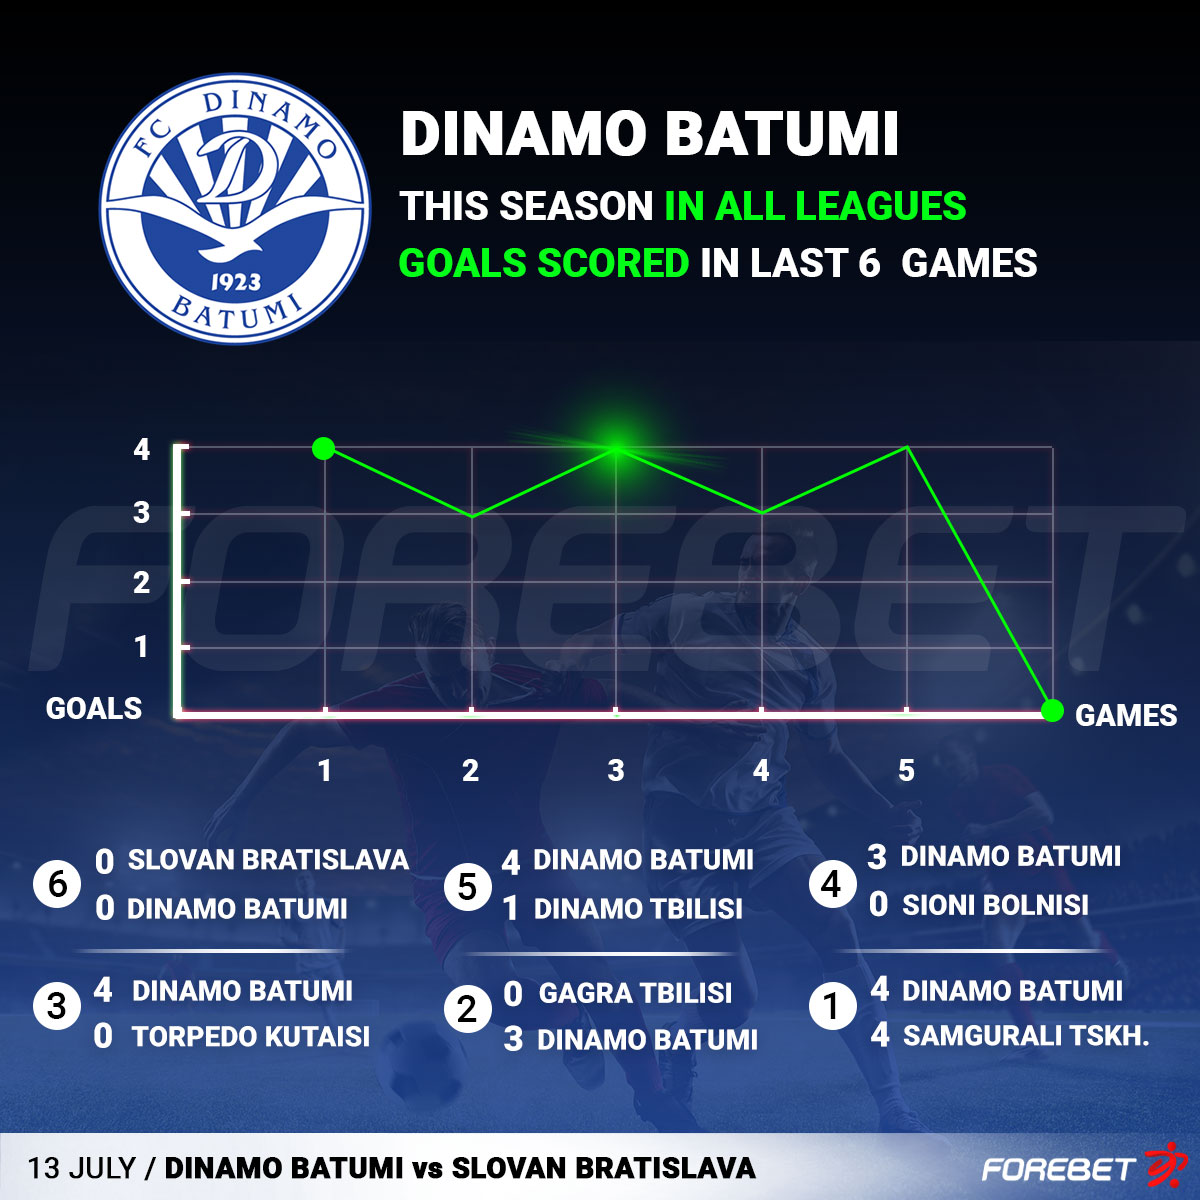 Conference League Qualifiers News: Dinamo Batumi vs KF Tirana